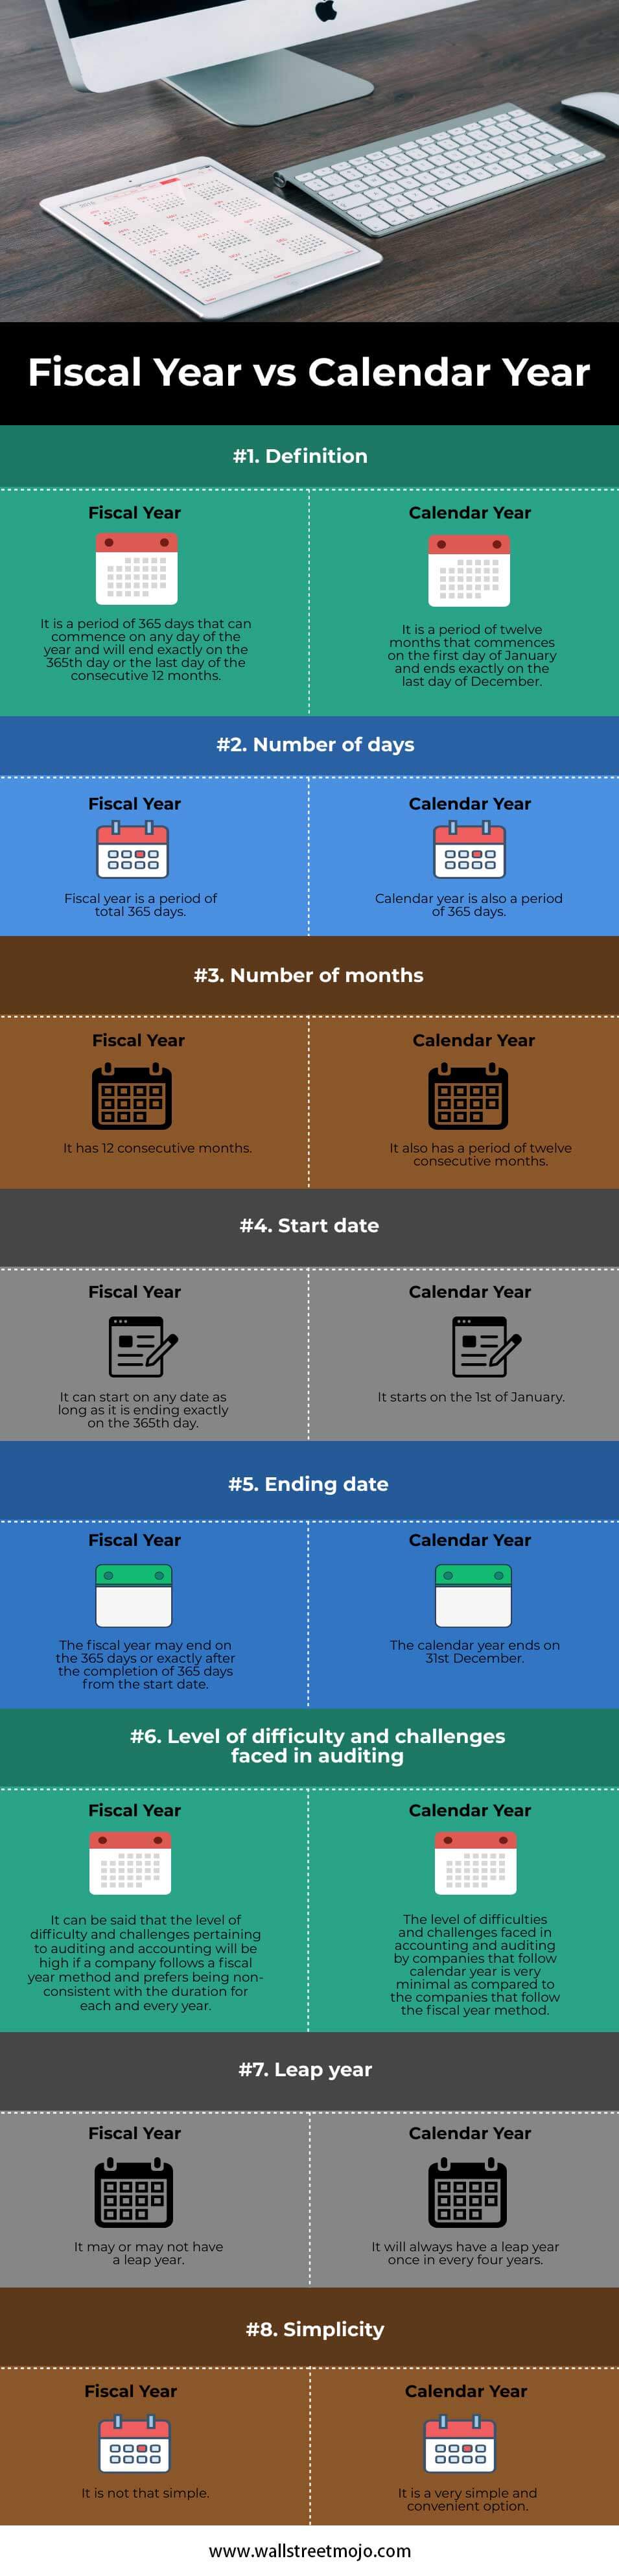 Fiscal-Year-vs-Calendar-Year-info